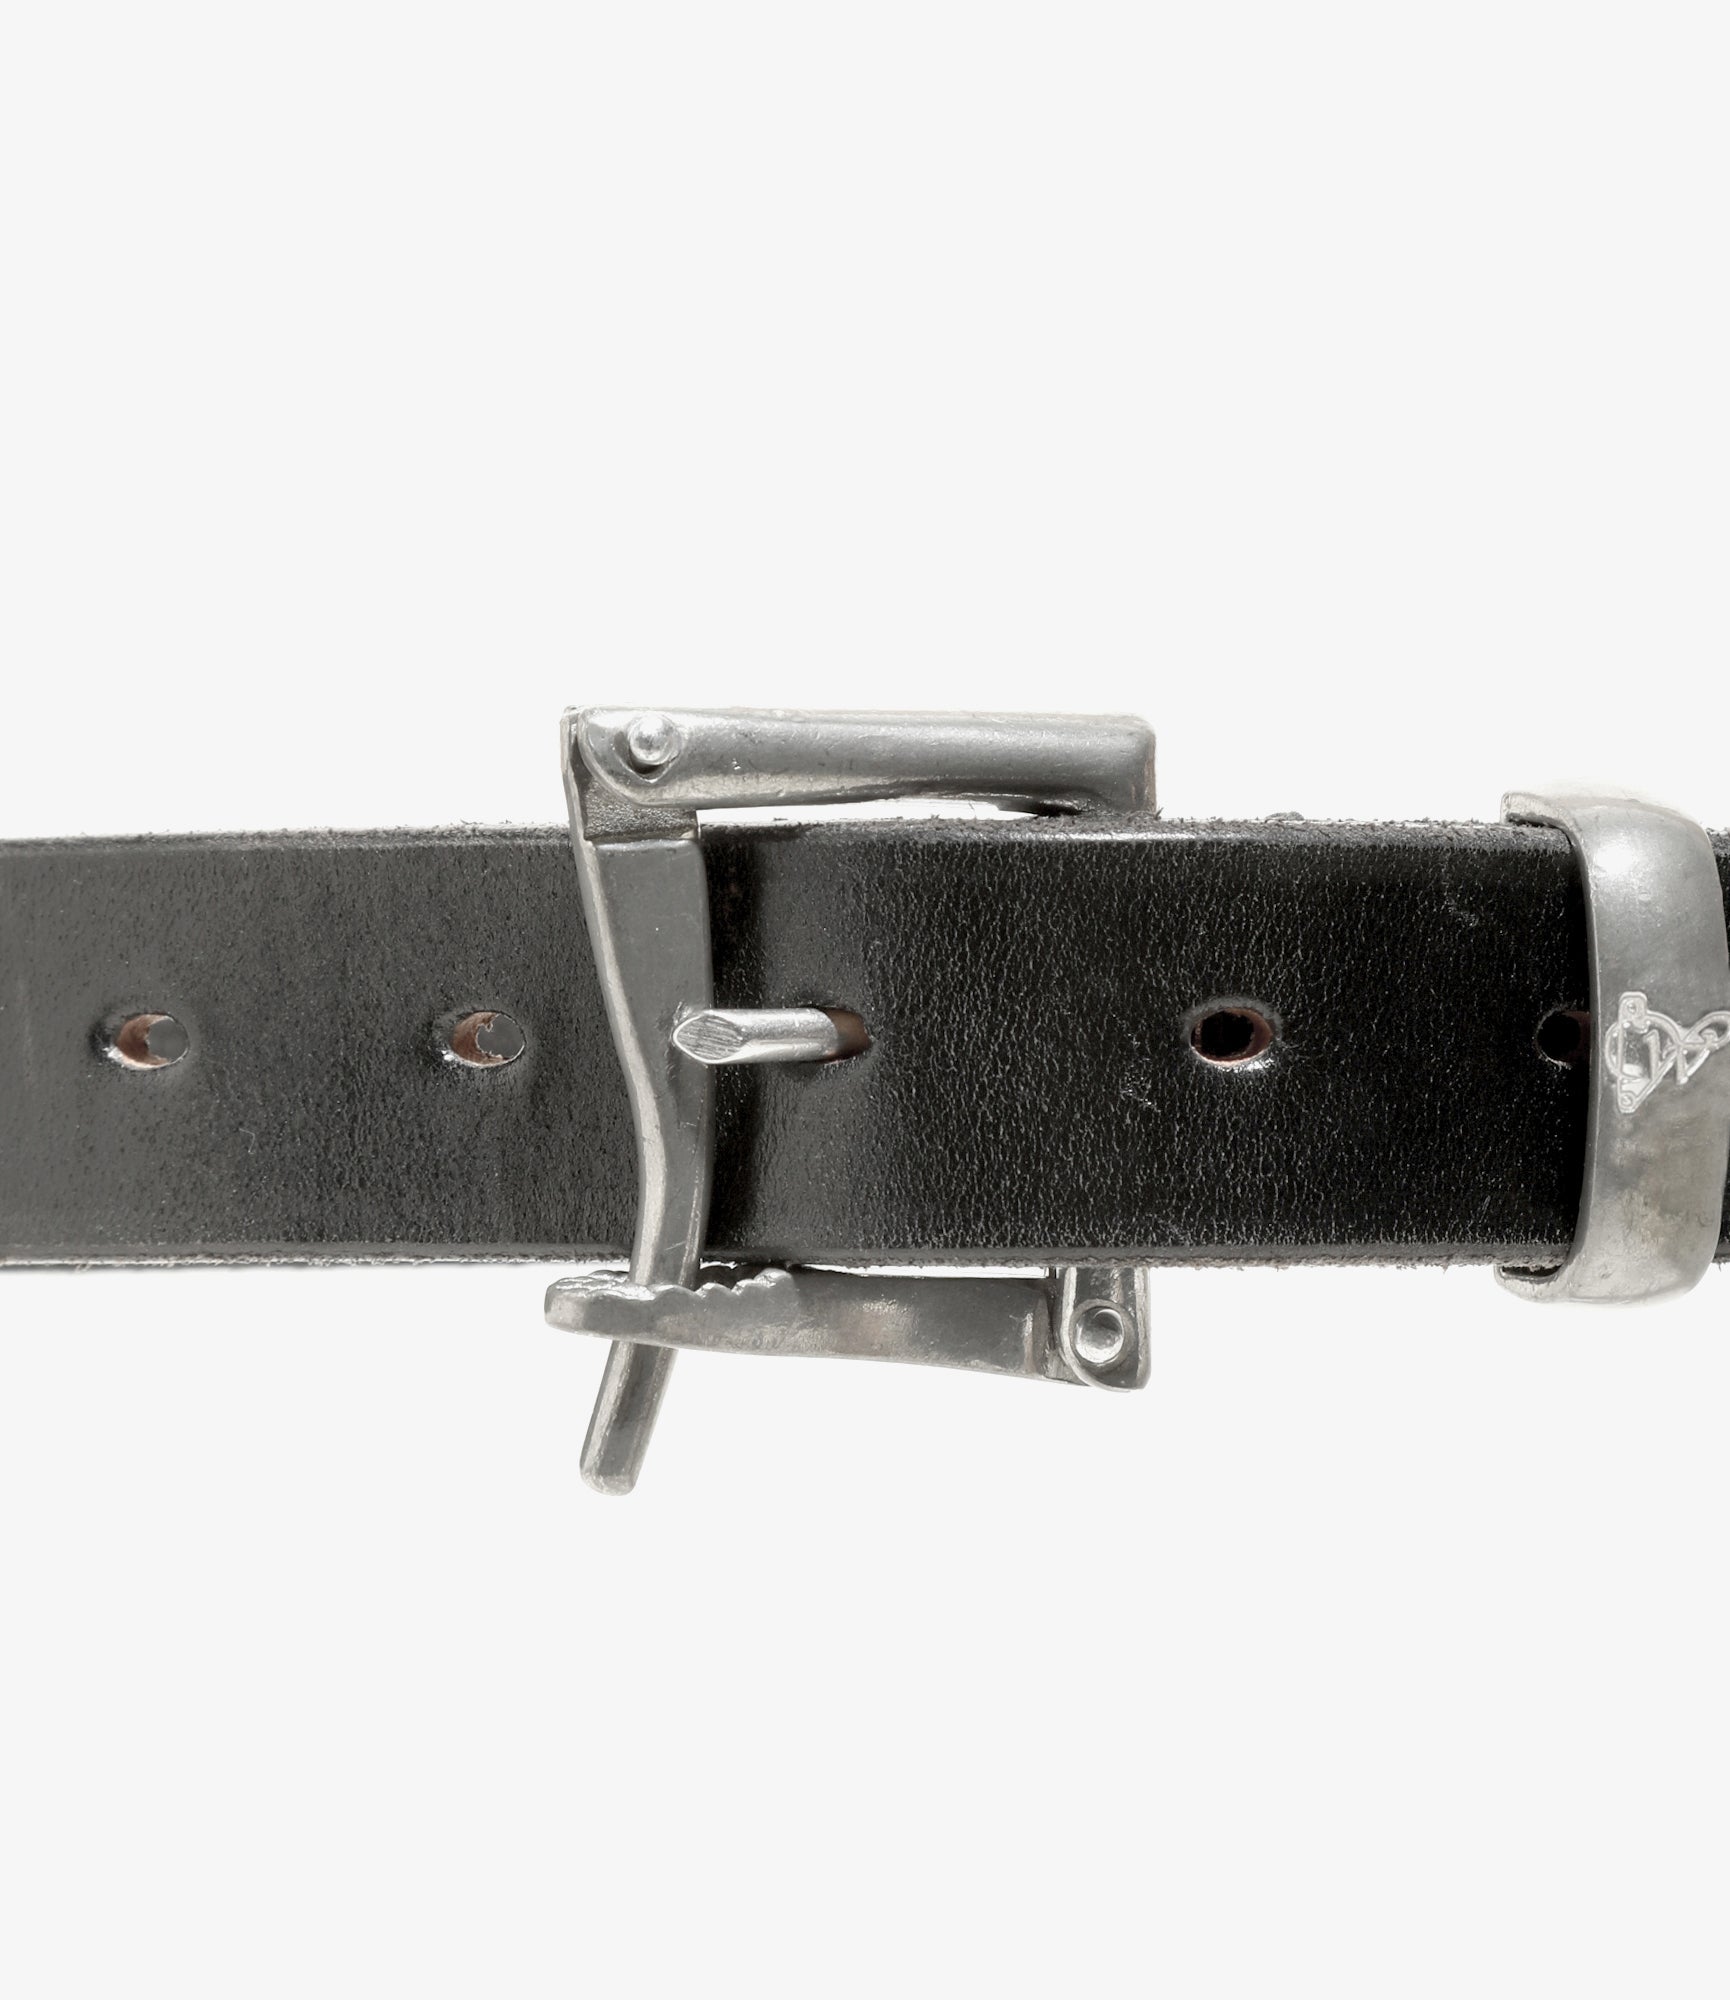 QR Belt - Plain - Black